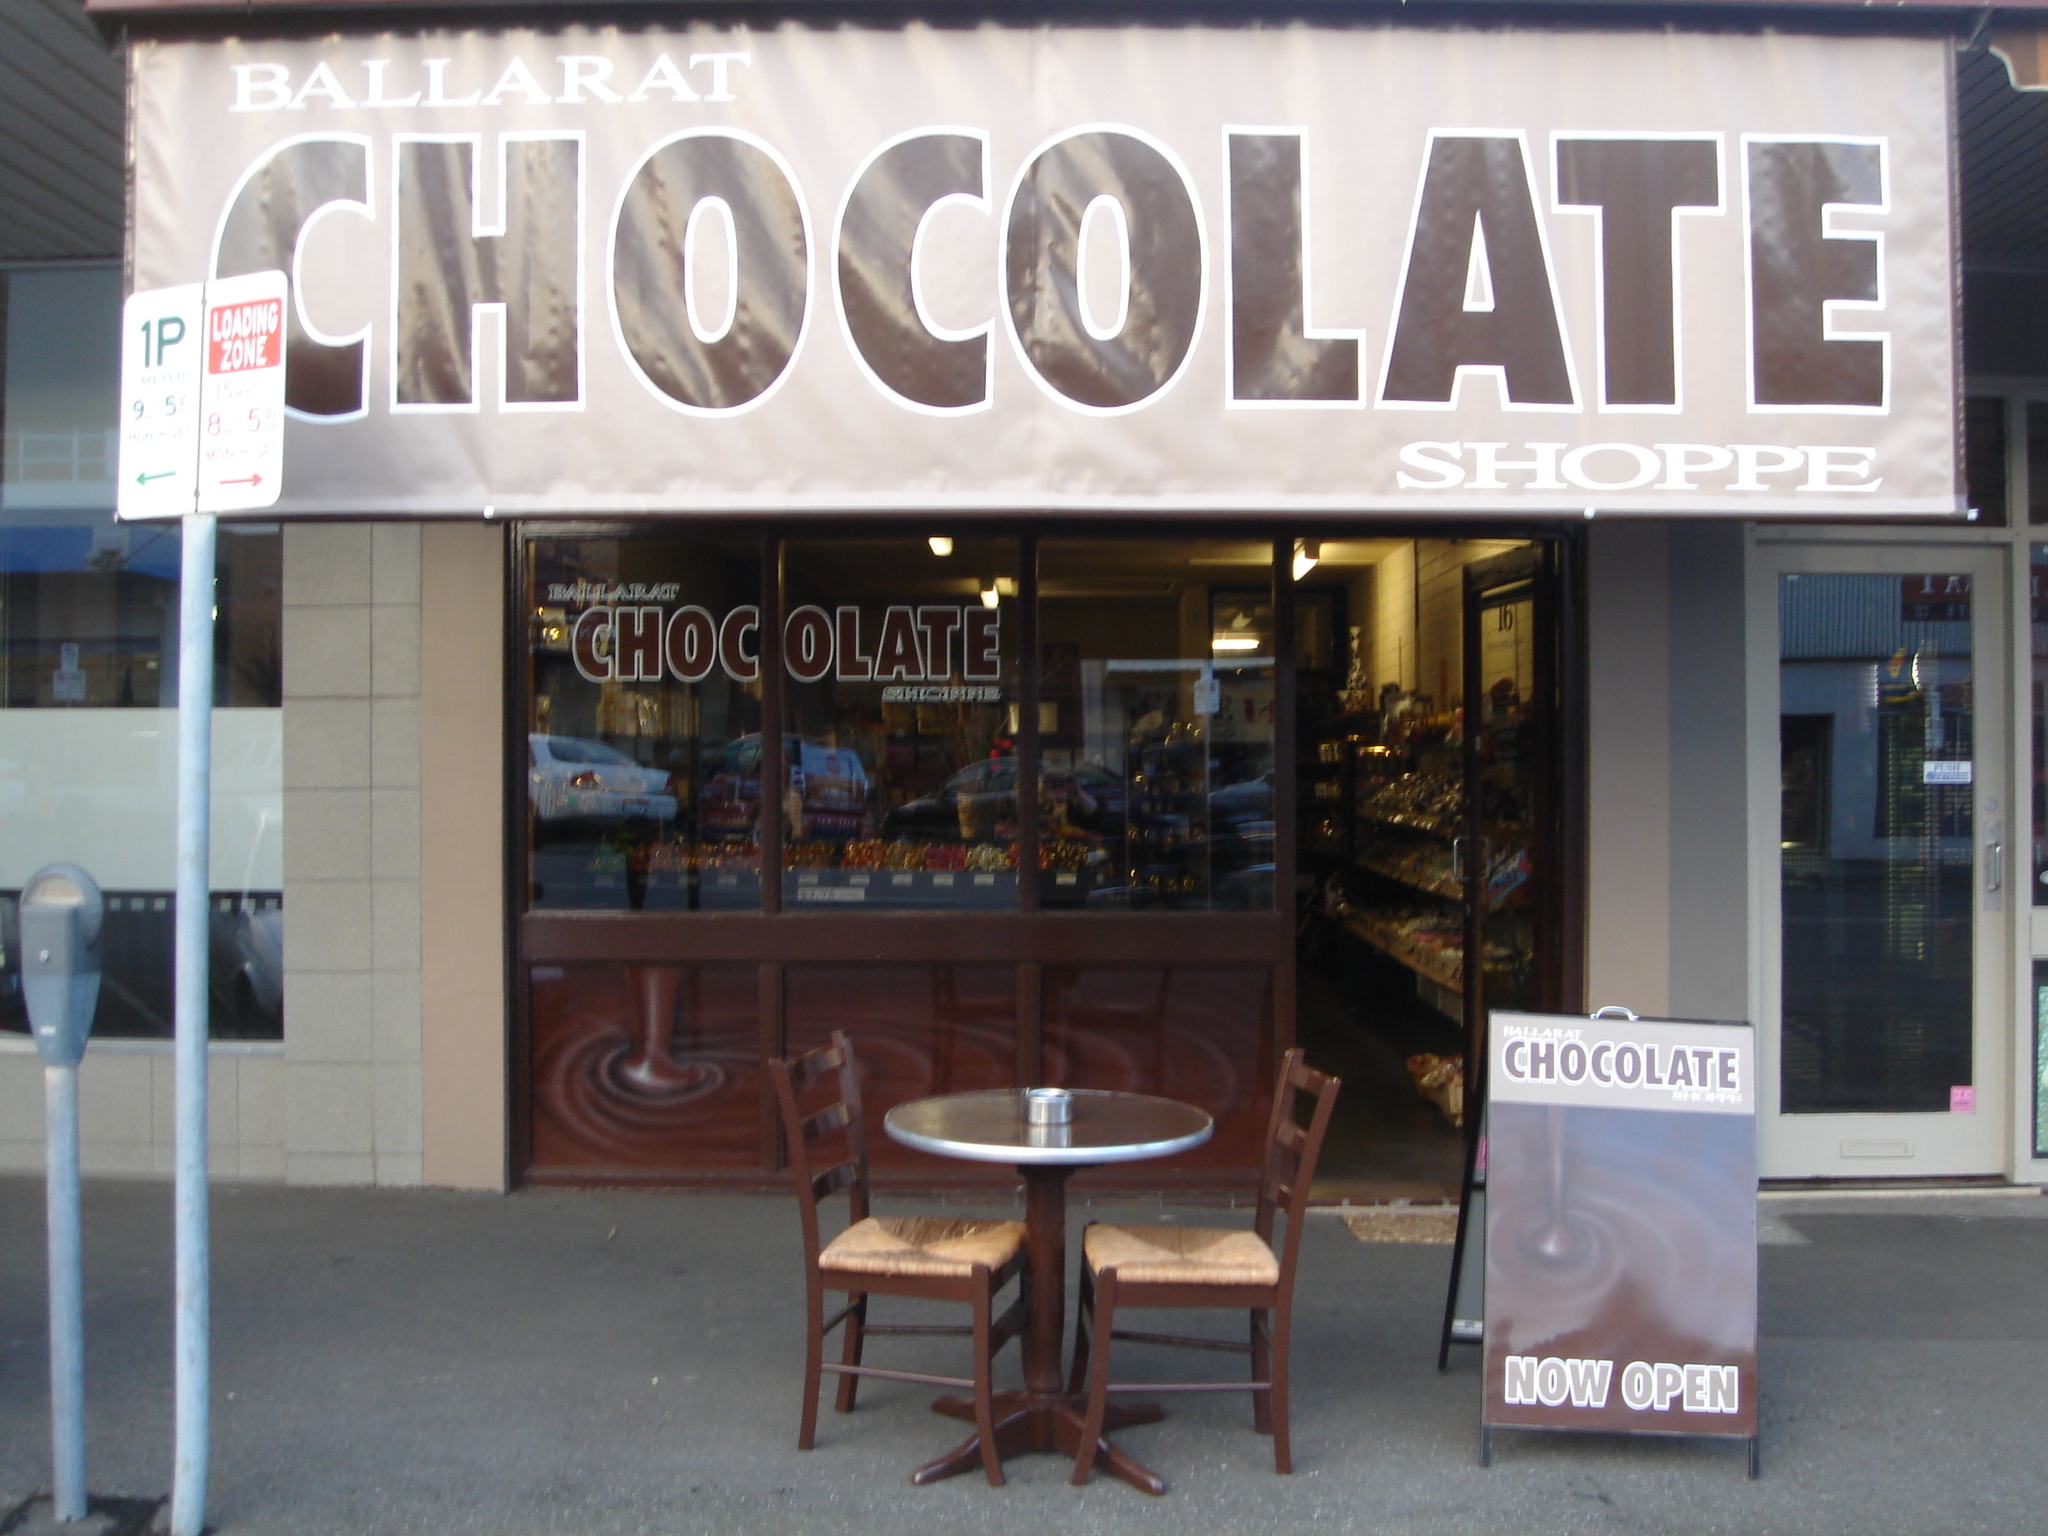 Ballarat Chocolate Shoppe